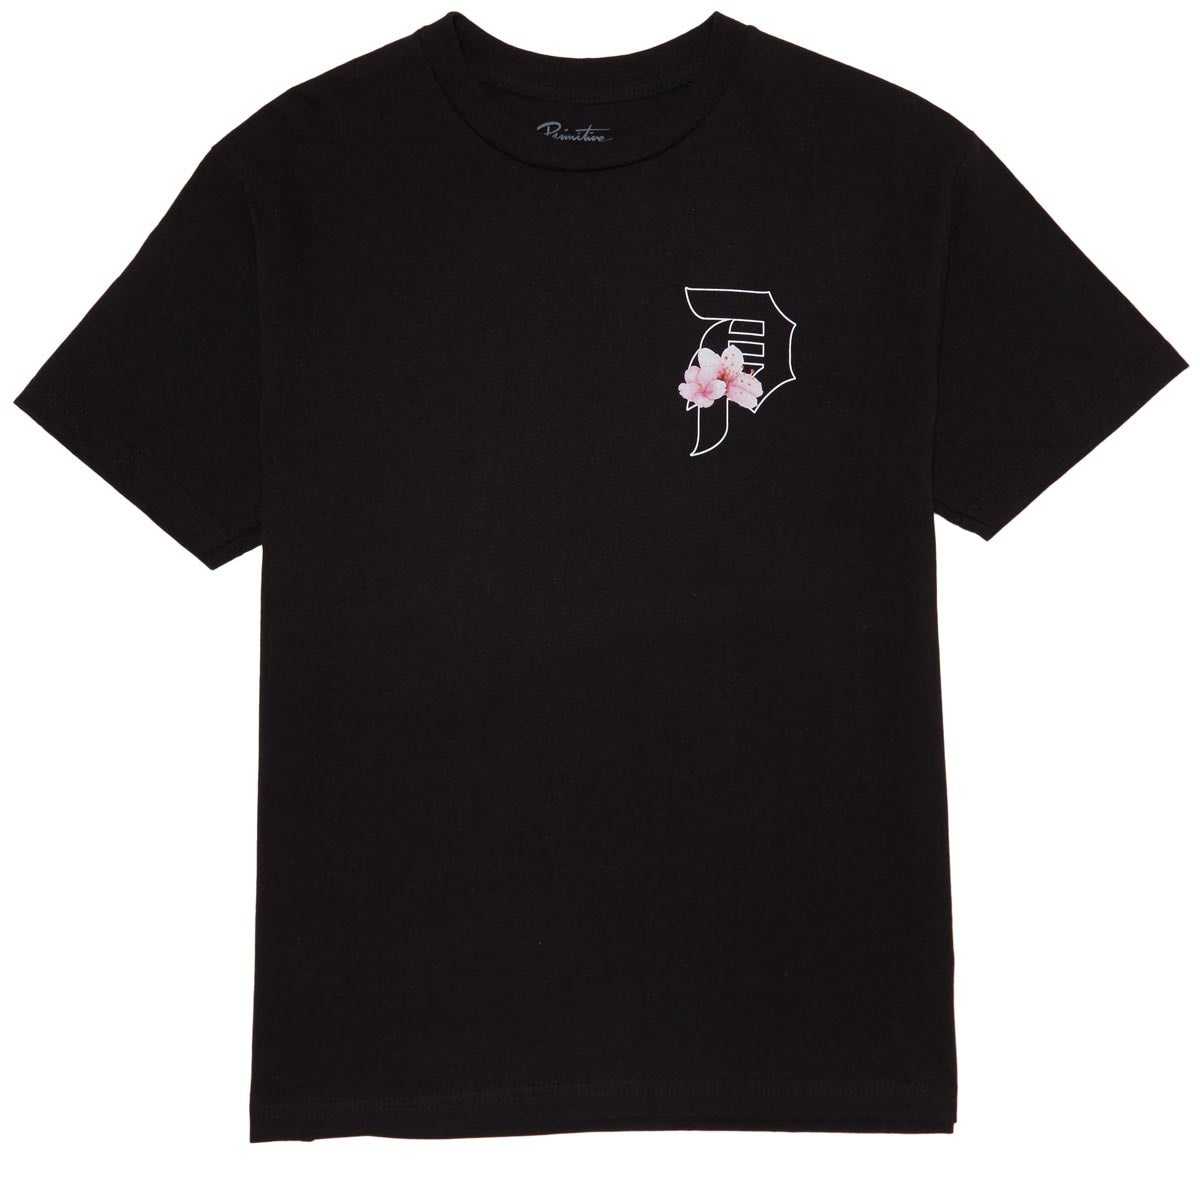 Primitive Sakura T-Shirt - Black image 2